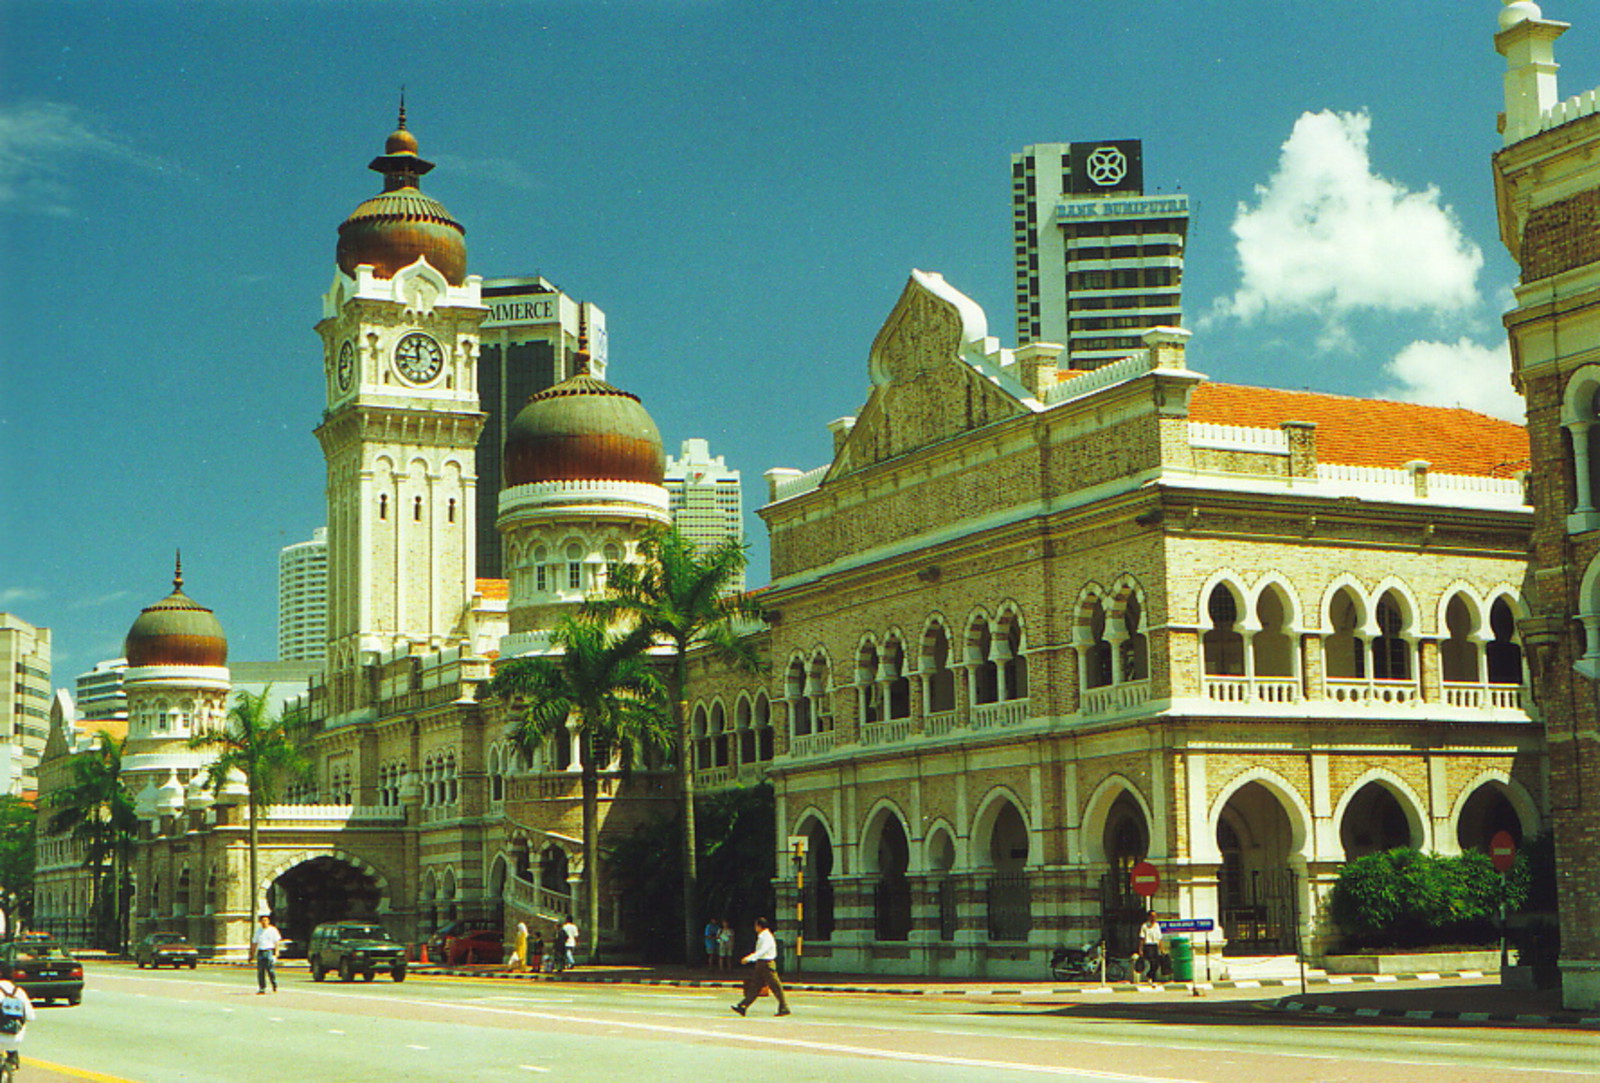 The Sultan Addul Samad building in Merdeka Square